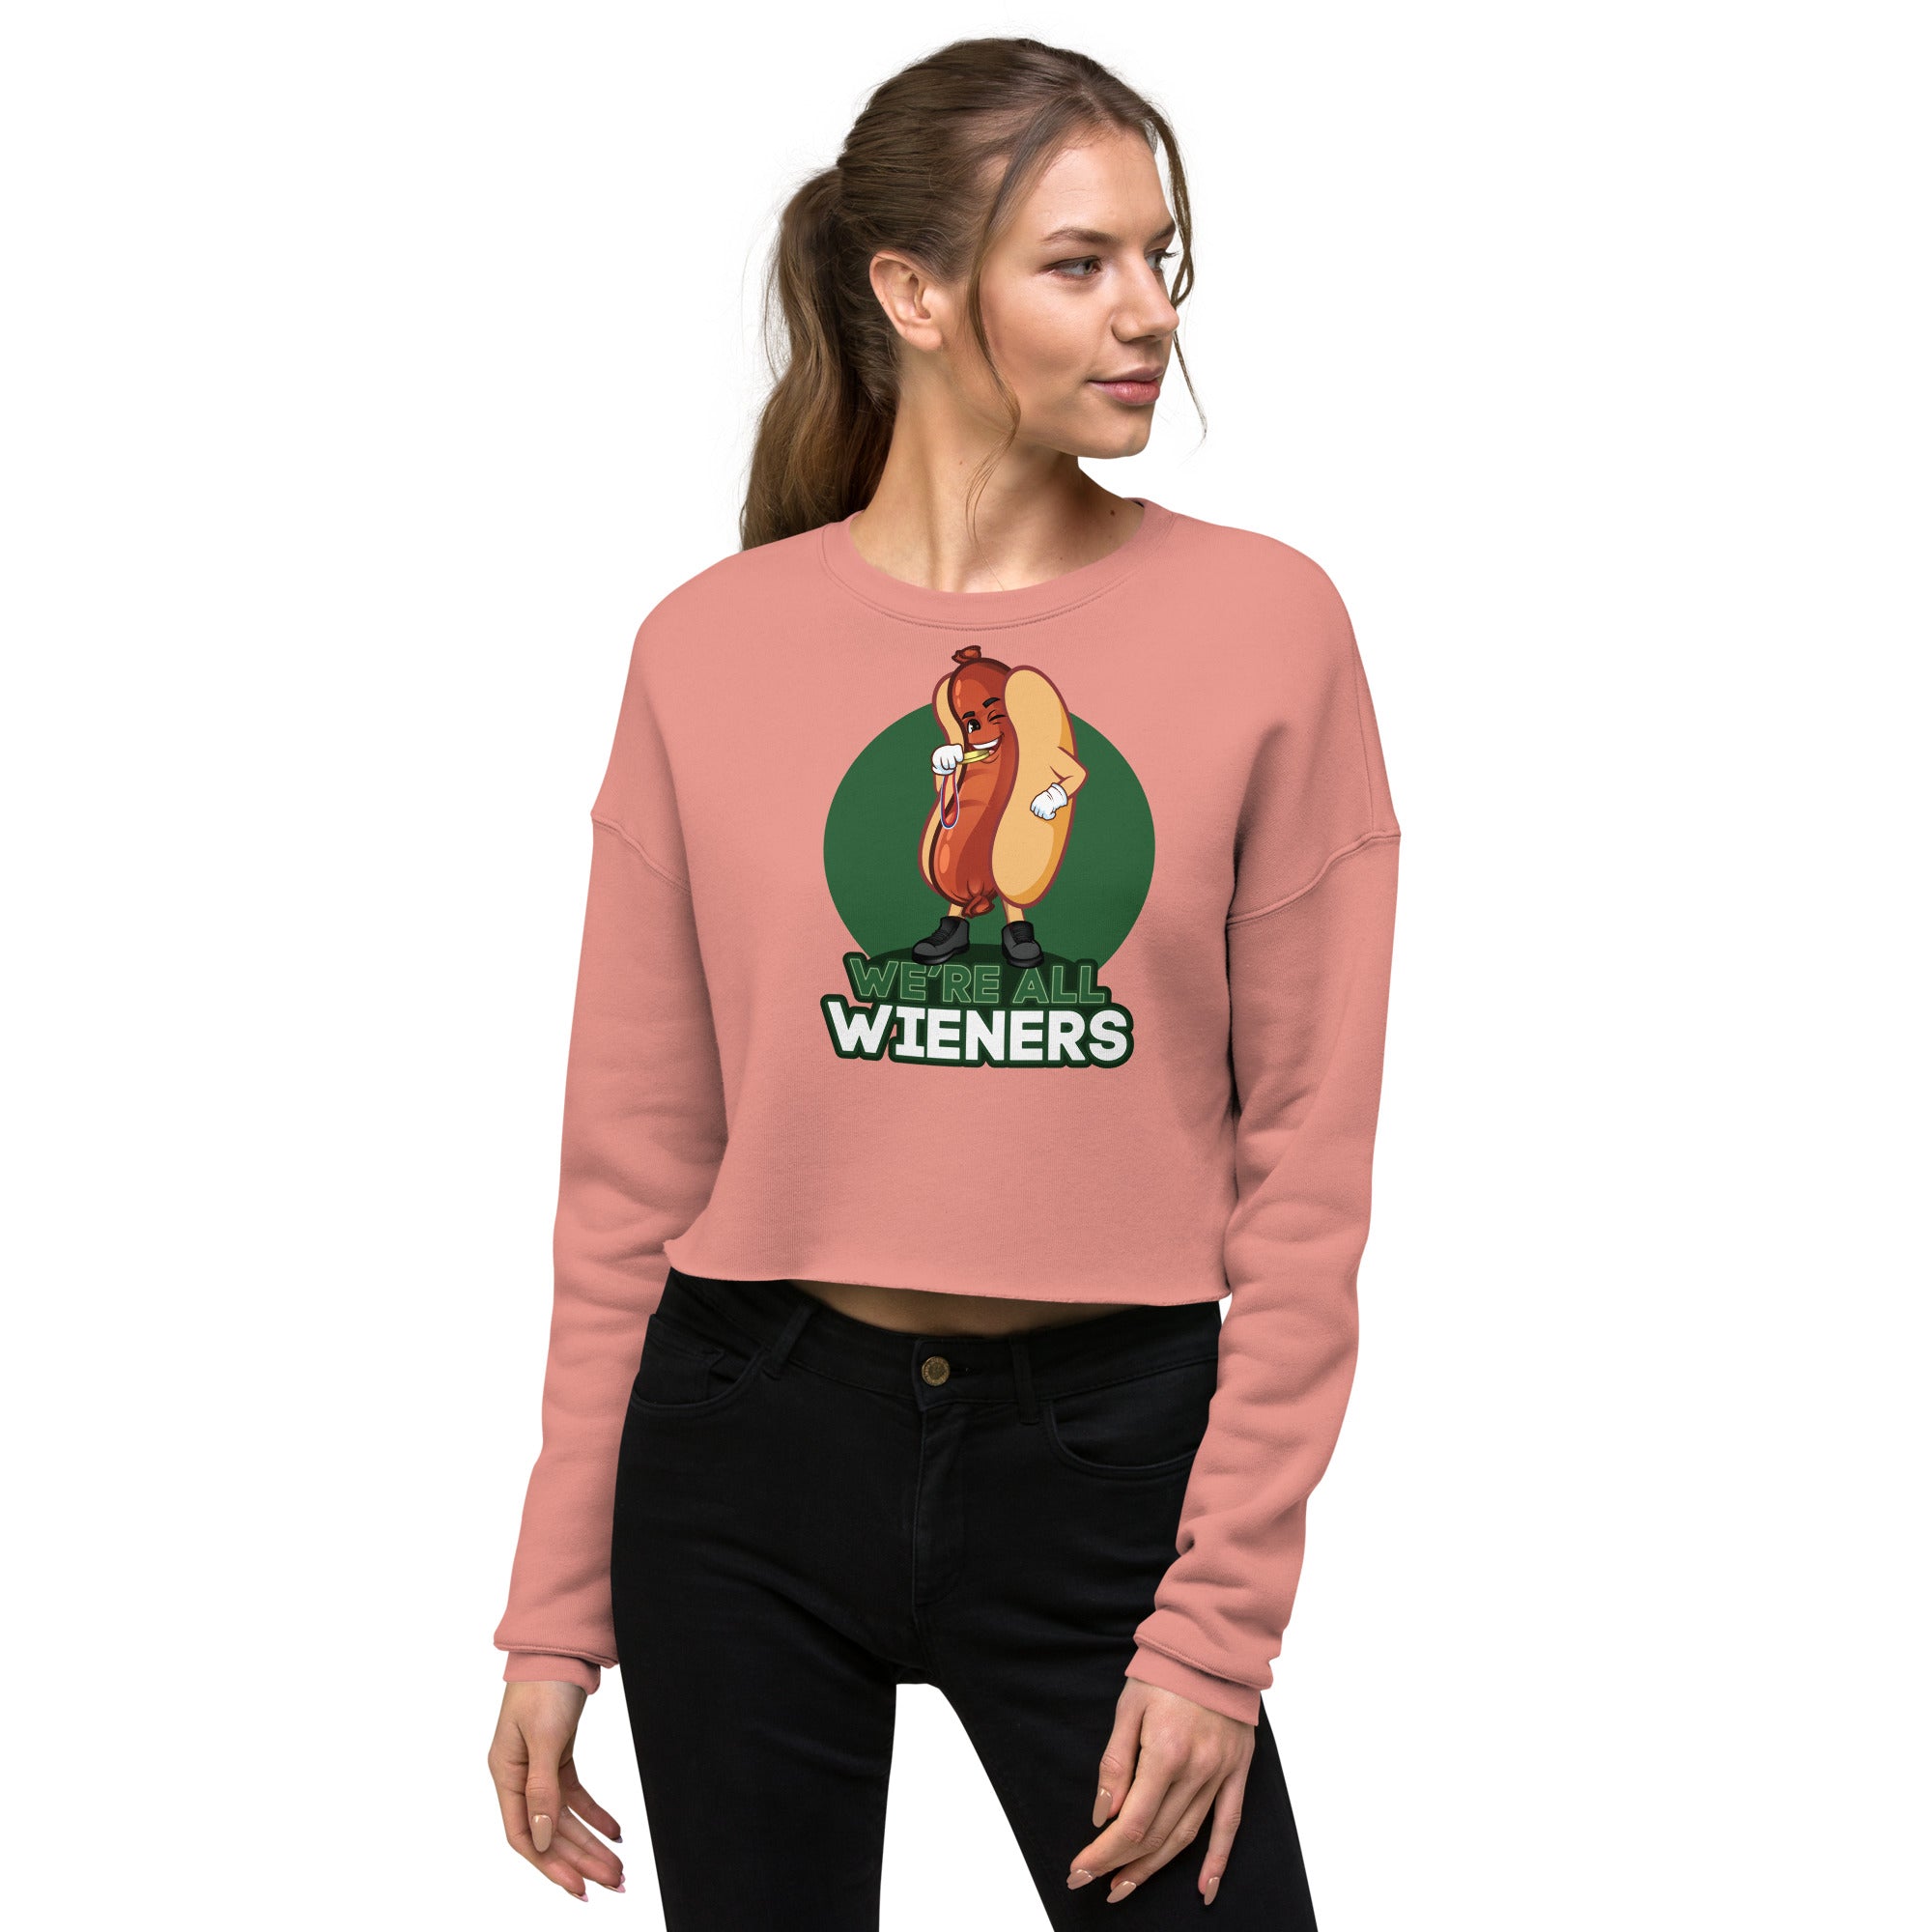 We're All Wieners Women's Crop Sweatshirt - Green